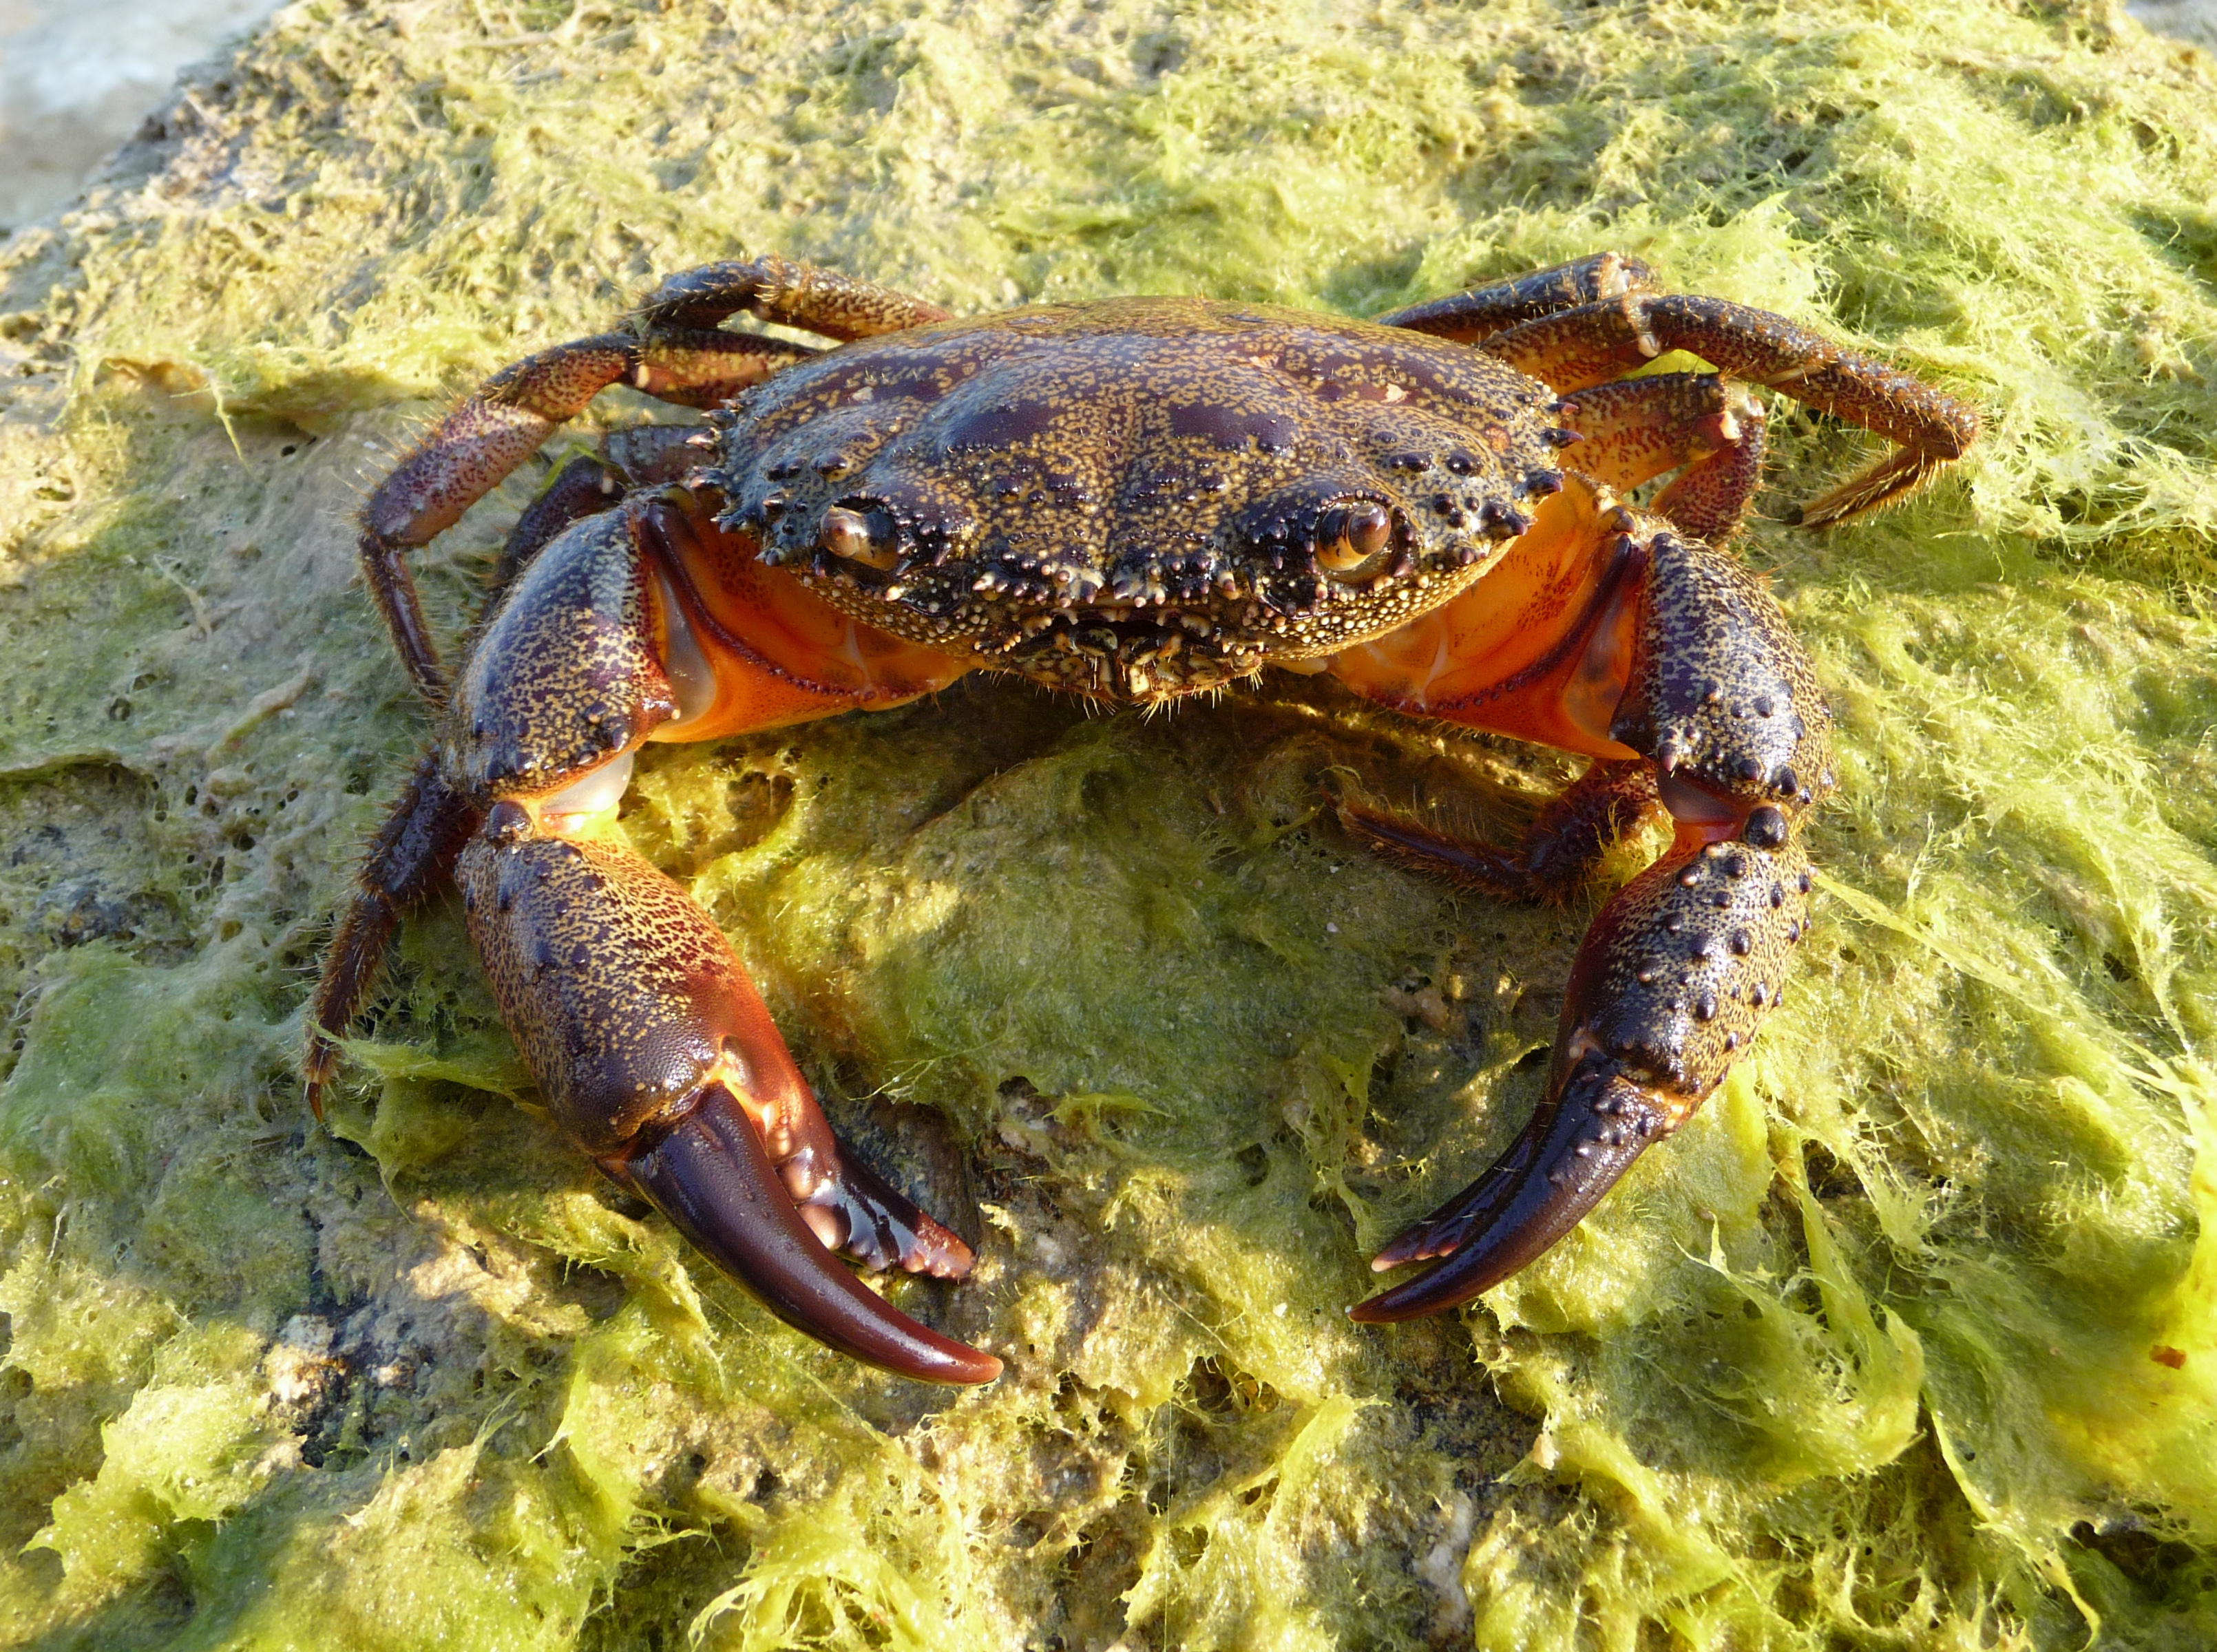 Warty crab photo